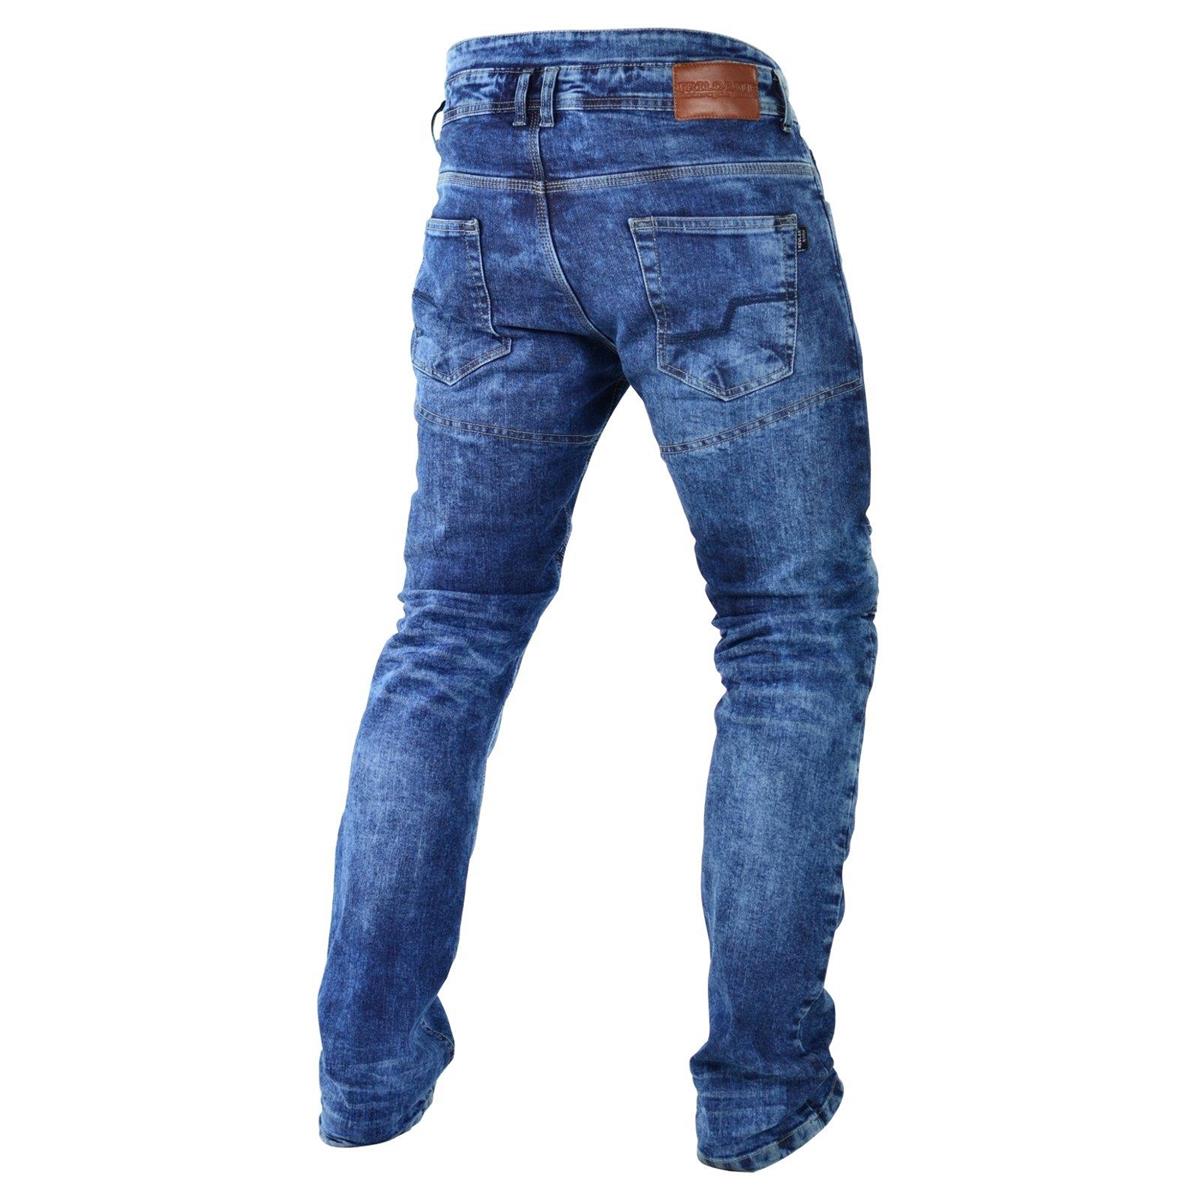 TRILOBITE Motorrad Jeans MICAS URBAN HERREN Slim Fit blau inkl Protektoren 34/32 